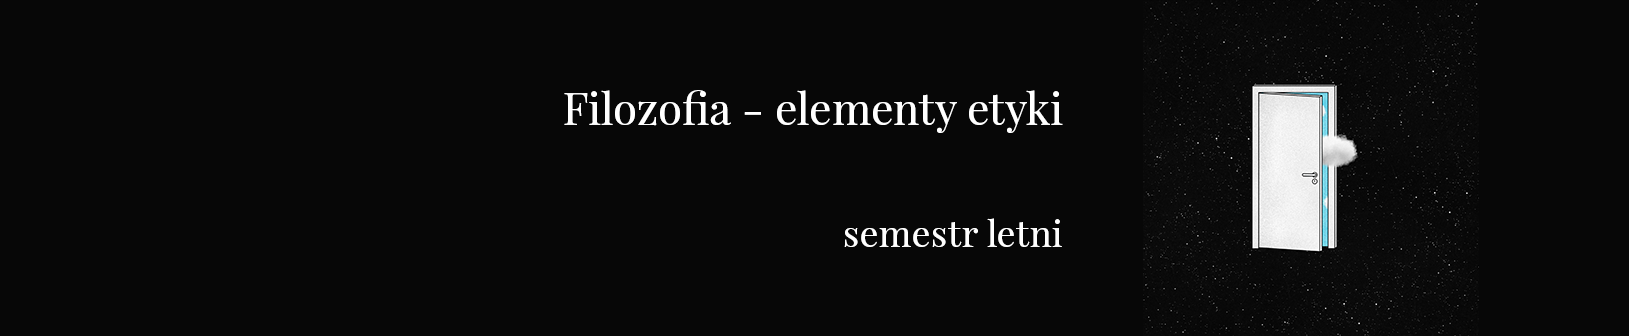 Course Image Filozofia - Elementy Etyki - WF_2021L